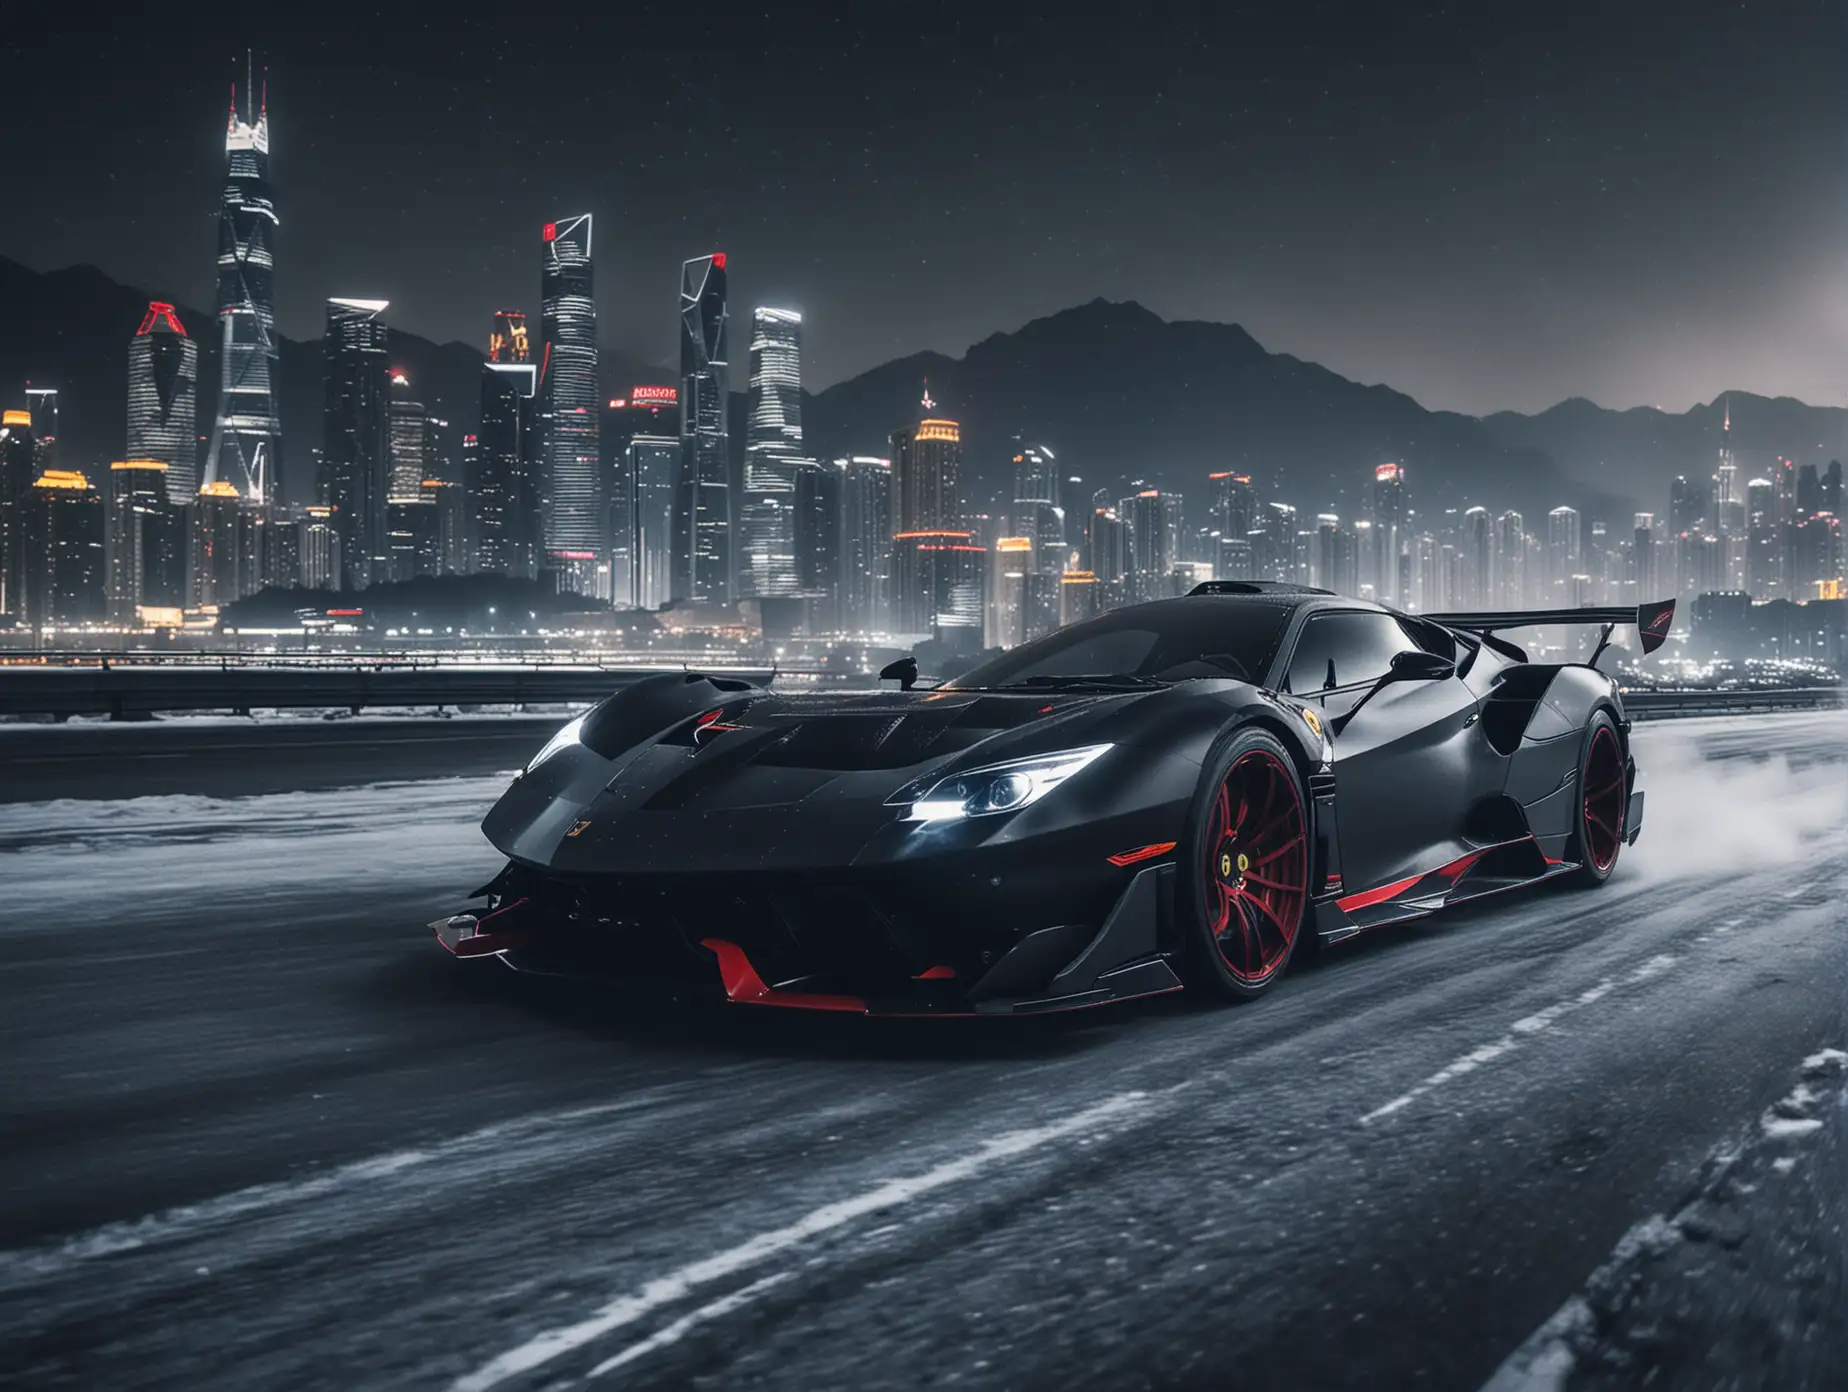 Futuristic-Ferrari-Daytona-SP-and-Lamborghini-Veneno-Tuned-Monsters-Speeding-Through-Night-Cityscape-with-Snowy-Mountain-Silhouettes